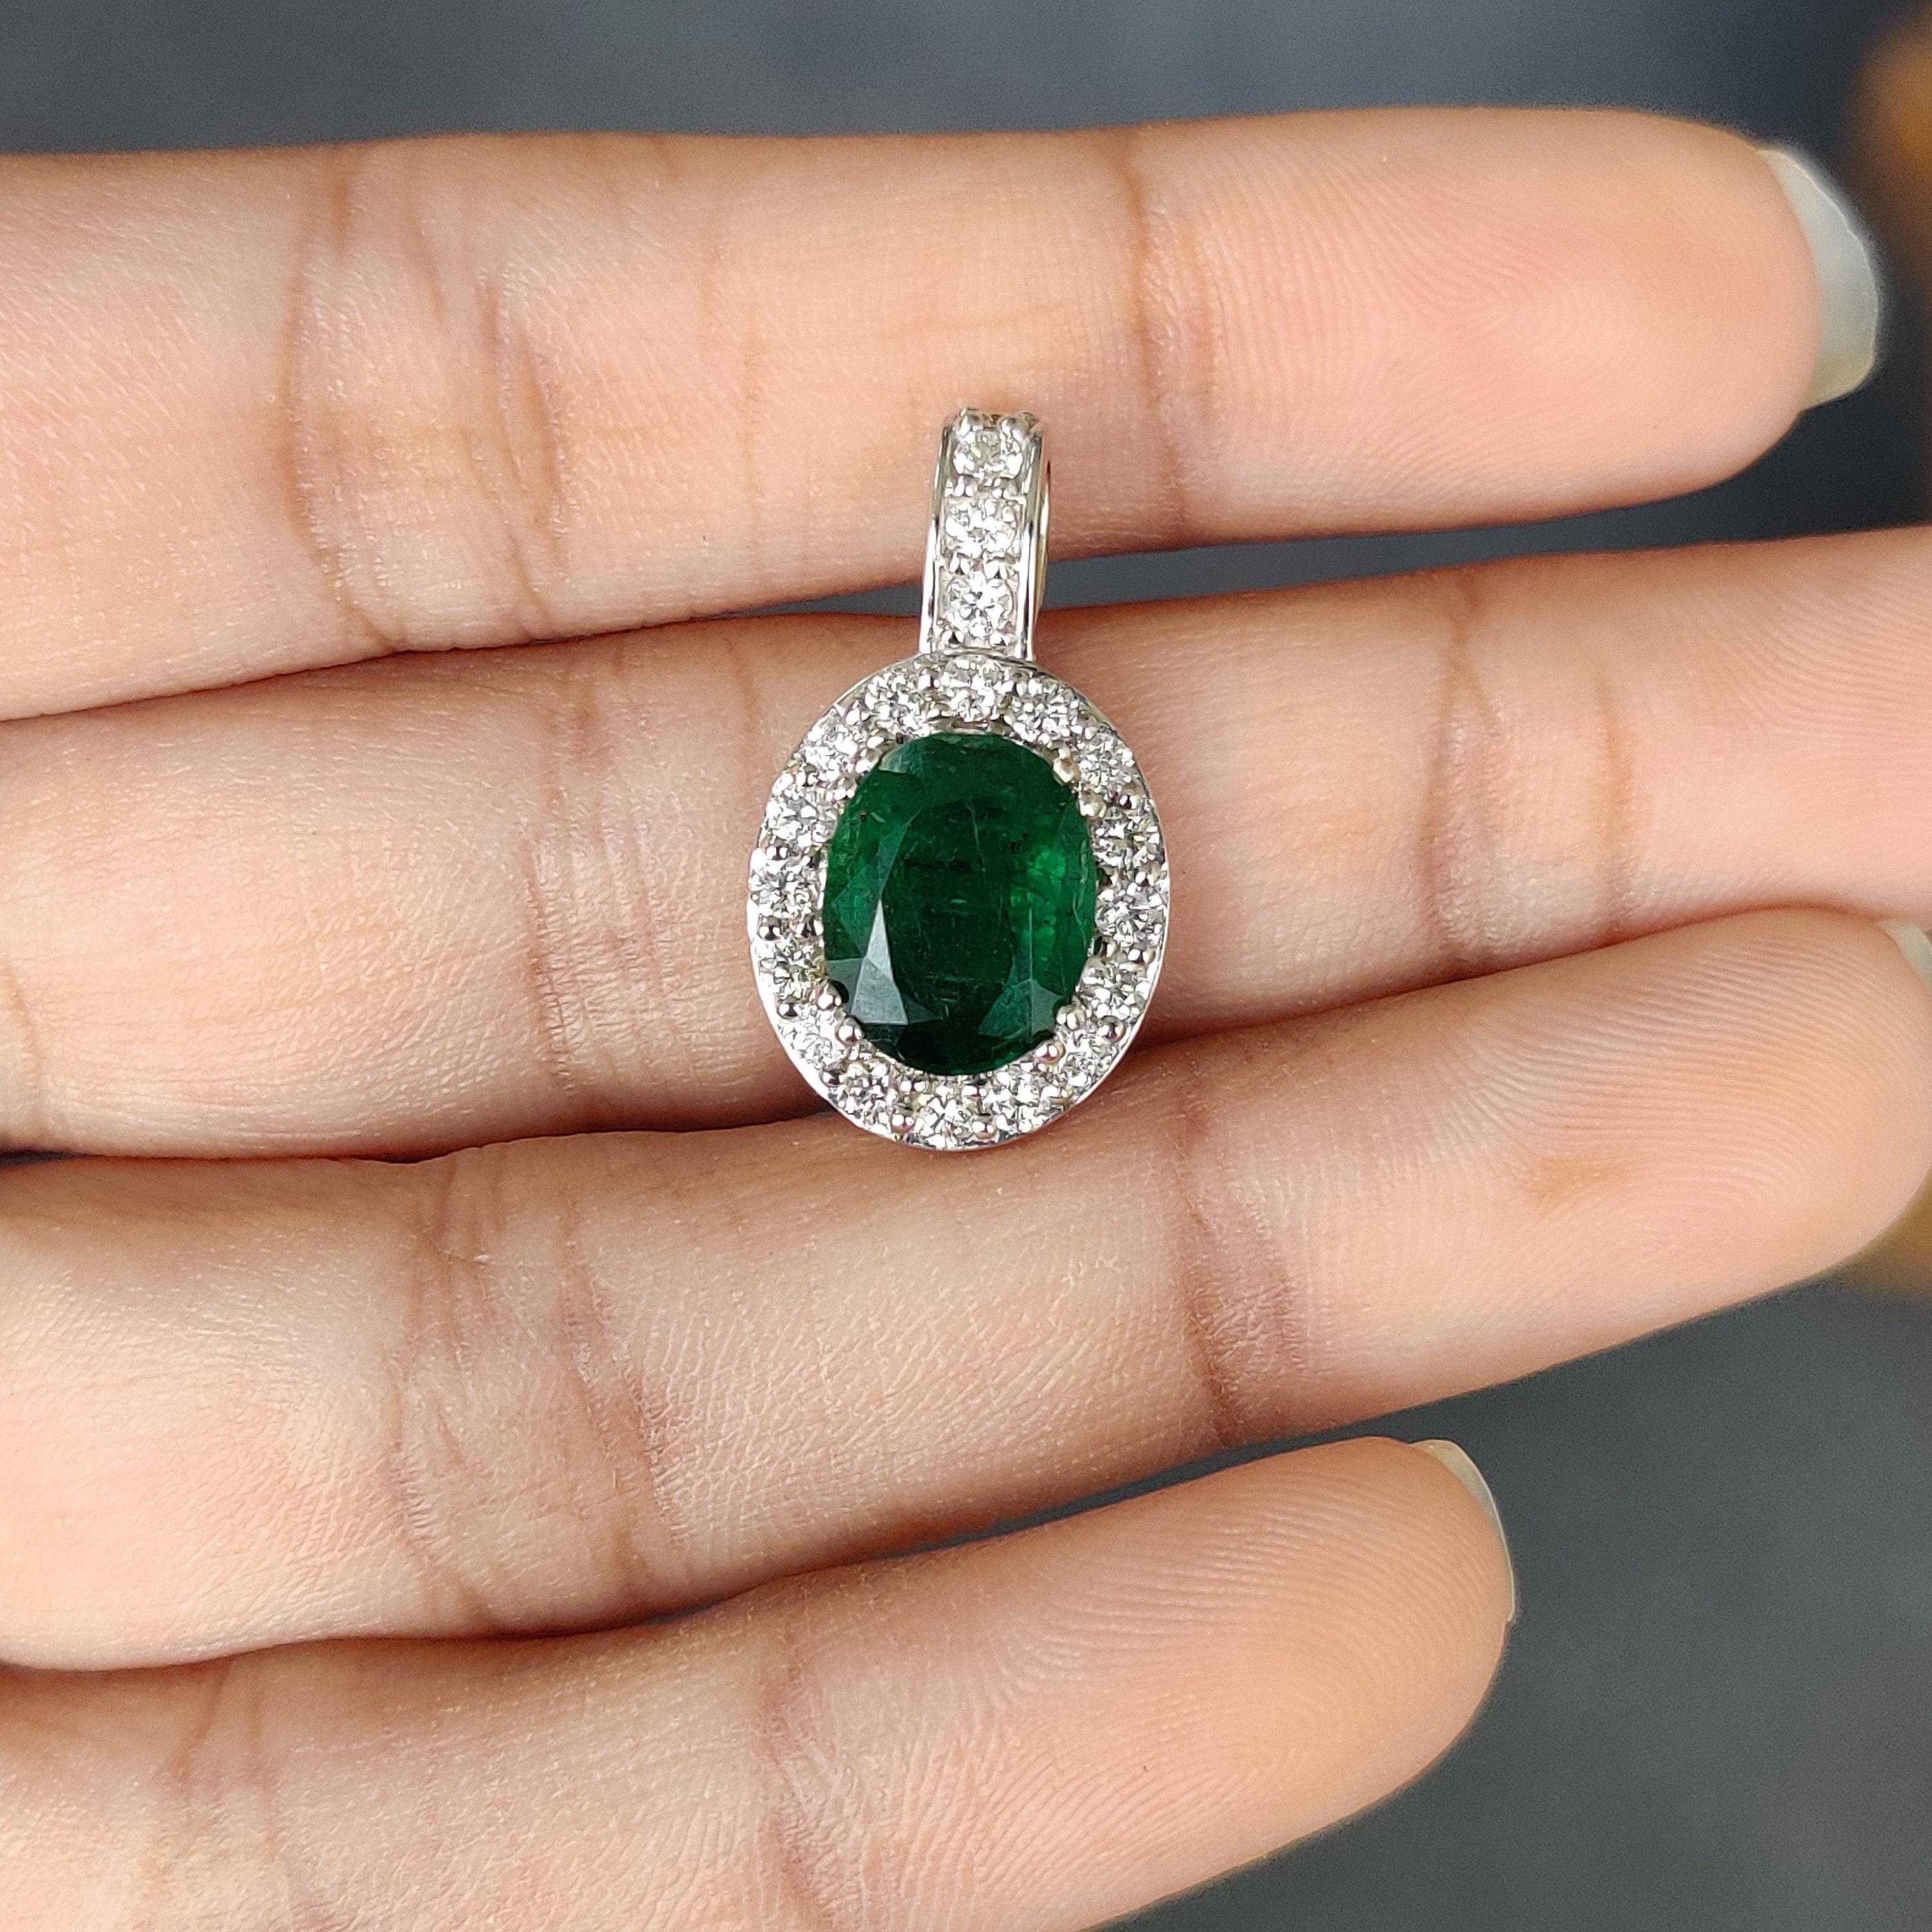 2.14 Ct Zambian Emerald Pendant with Halo Diamonds in 18K Gold 6